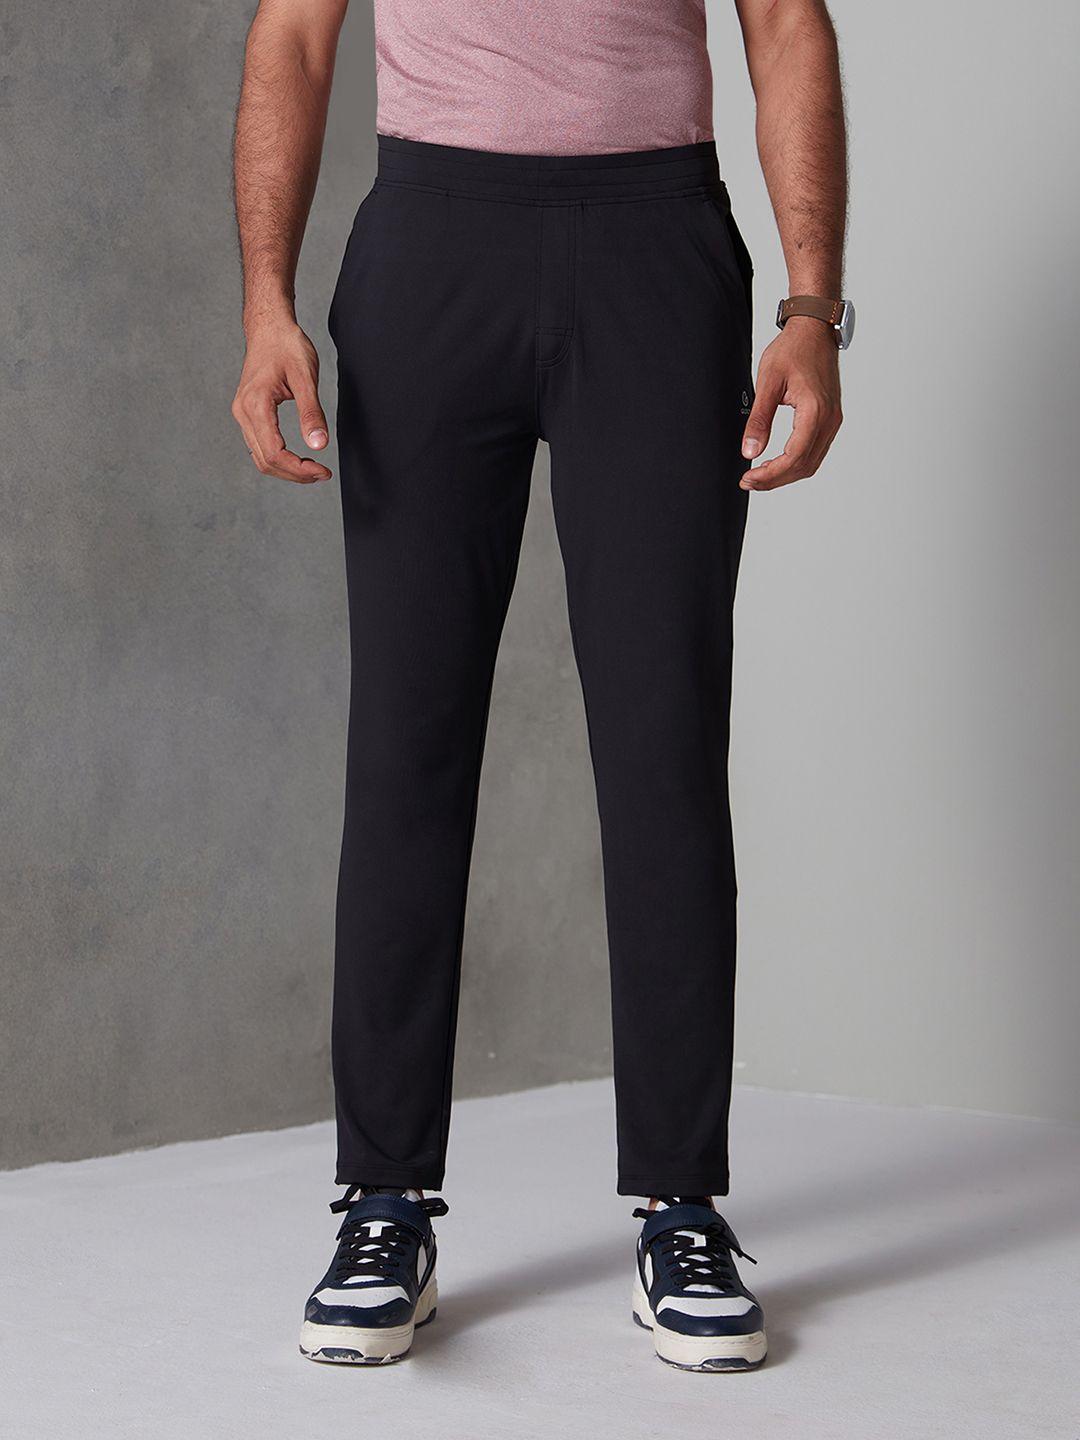 gloot slislim-fit anti-odour sports track pants with smart zip pocket